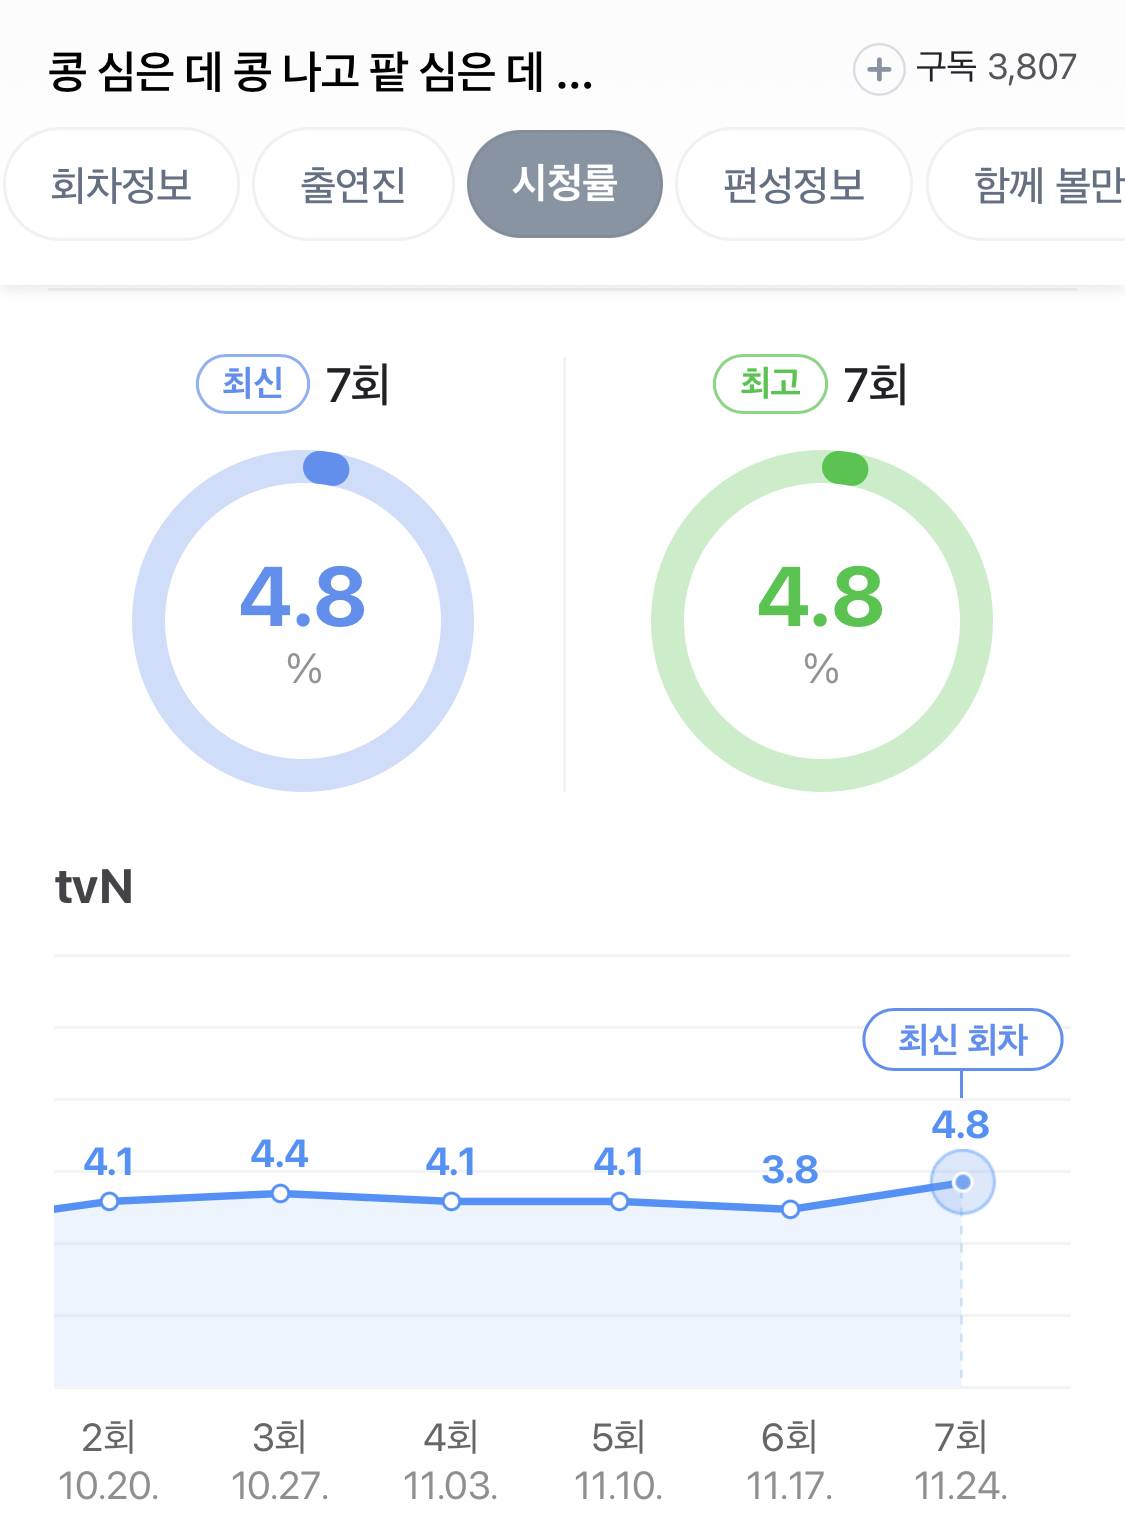 tvn 예능 콩콩팥팥 시청률 | 인스티즈